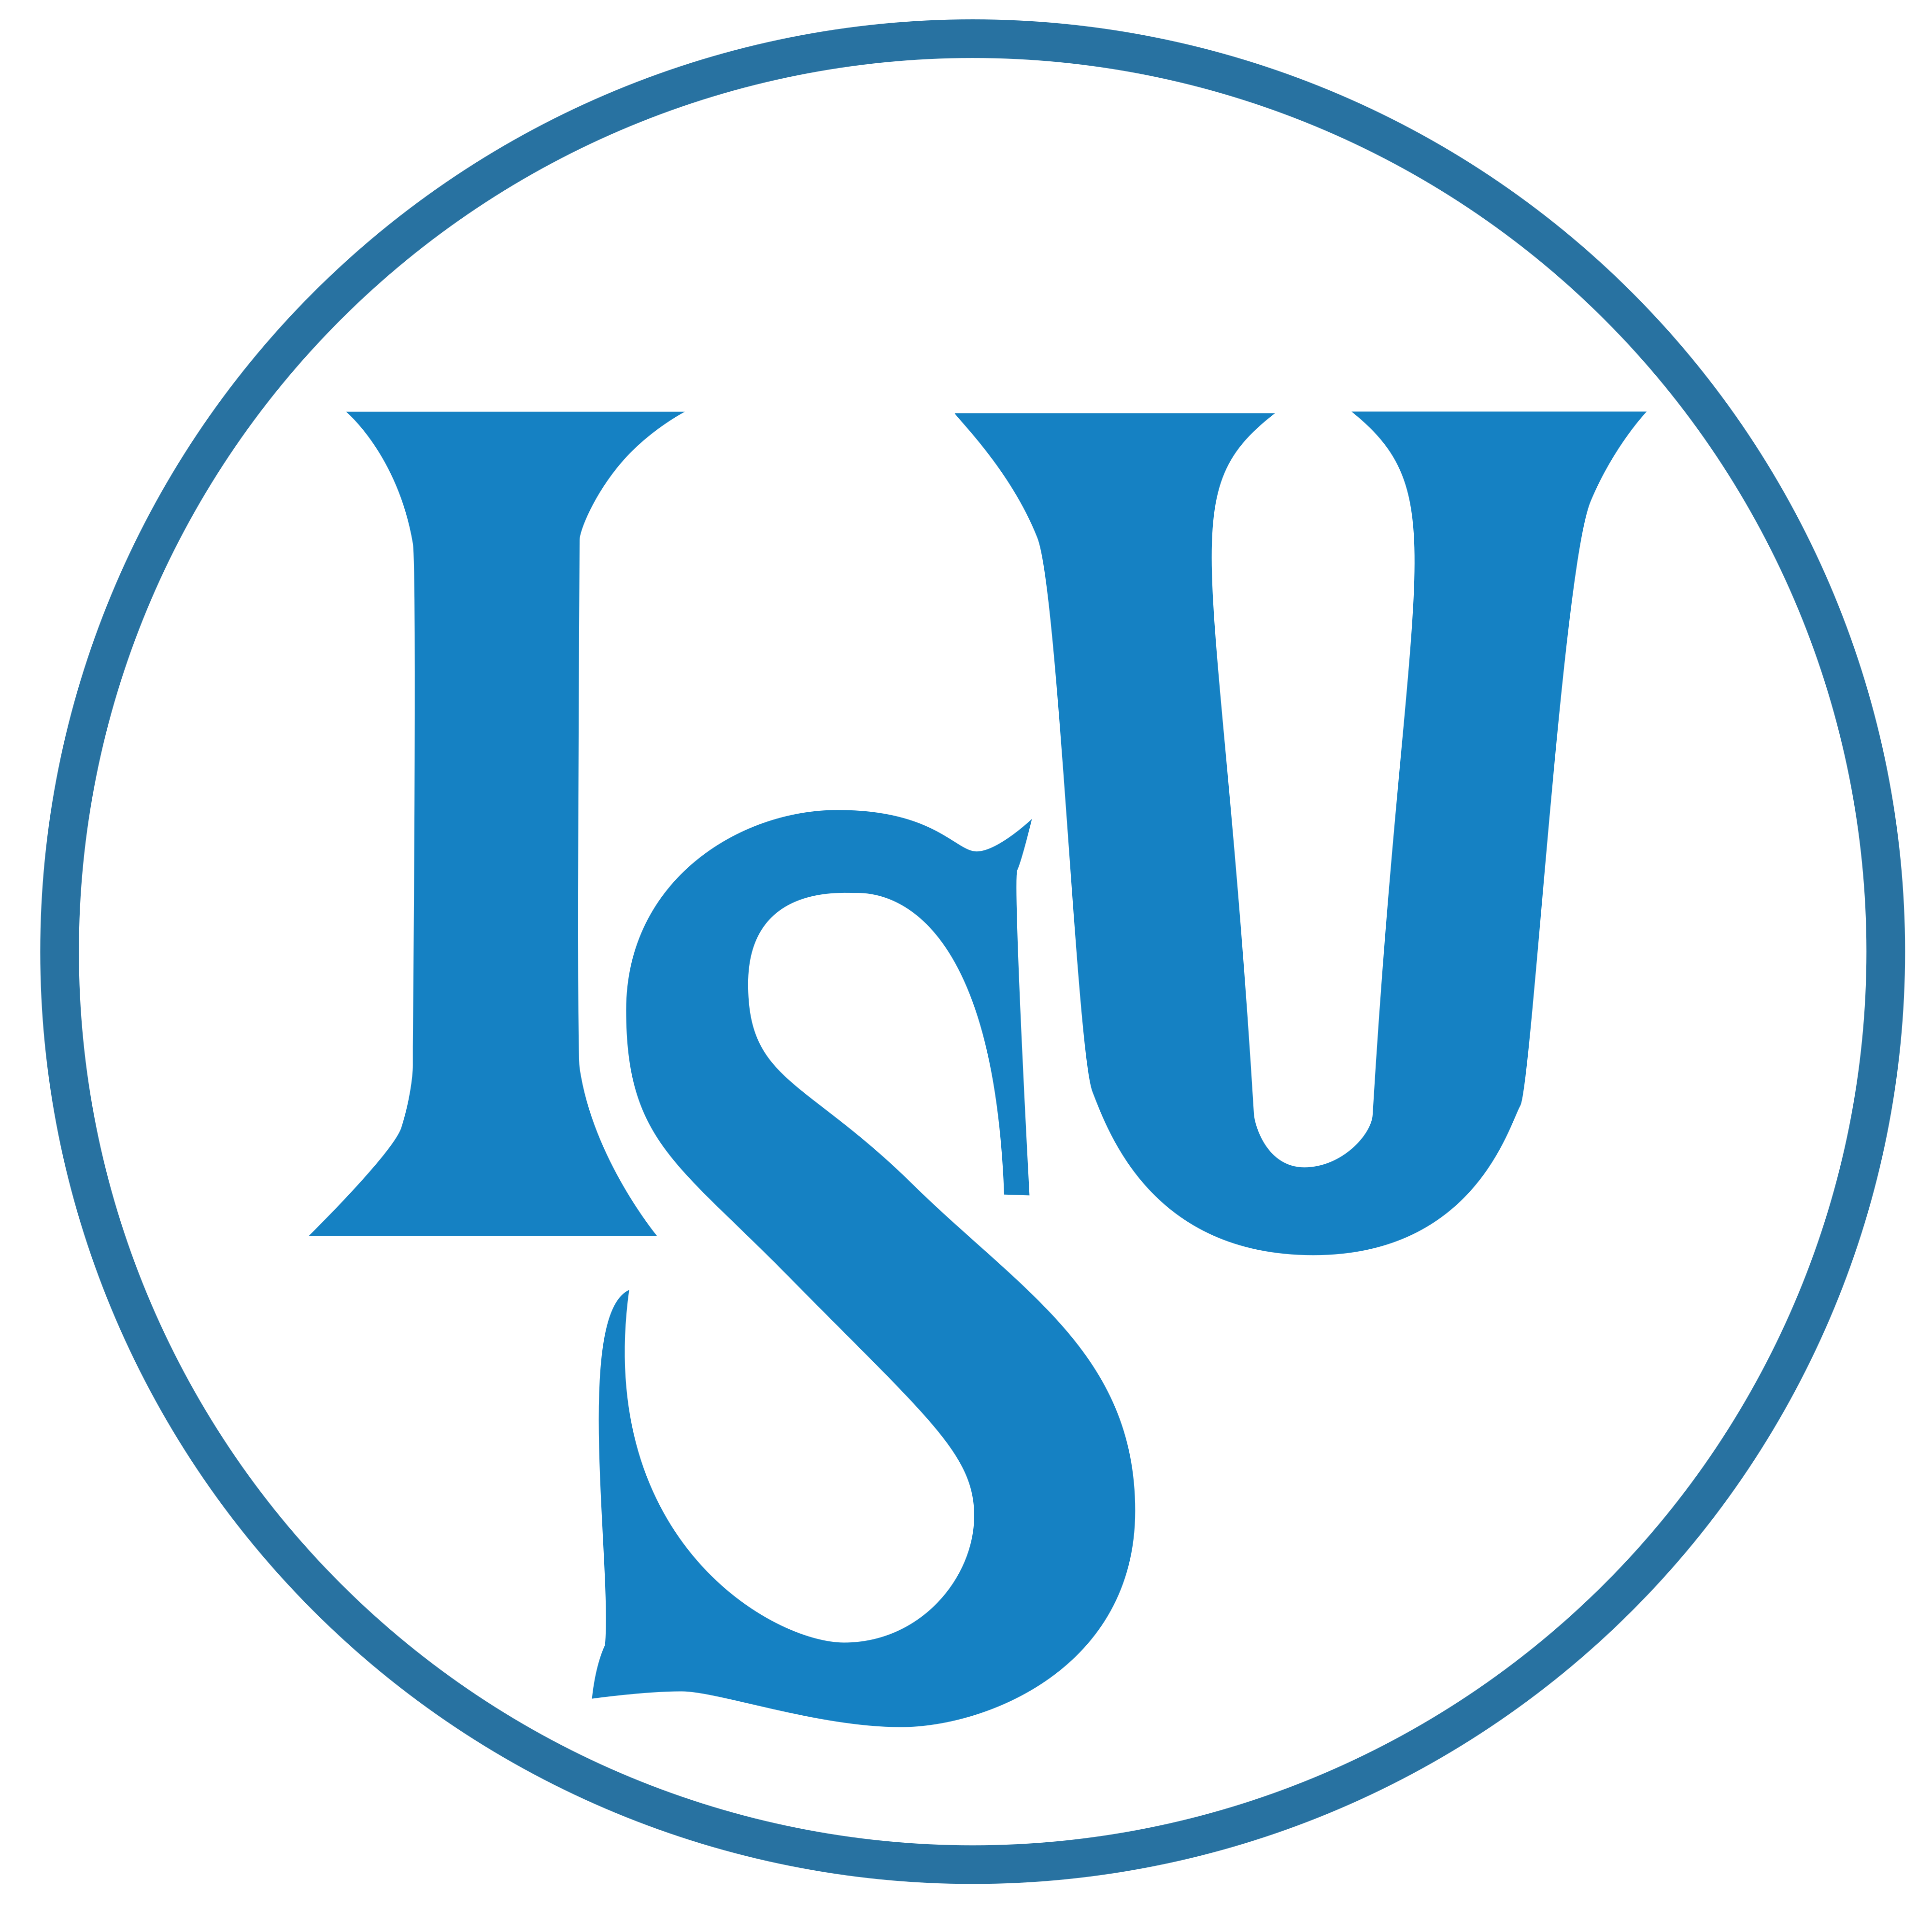 Международная федерация союзов. Международный Союз конькобежцев 1892. ISU logo. ISU Grand prix лого. Международный Союз конькобежцев лого.